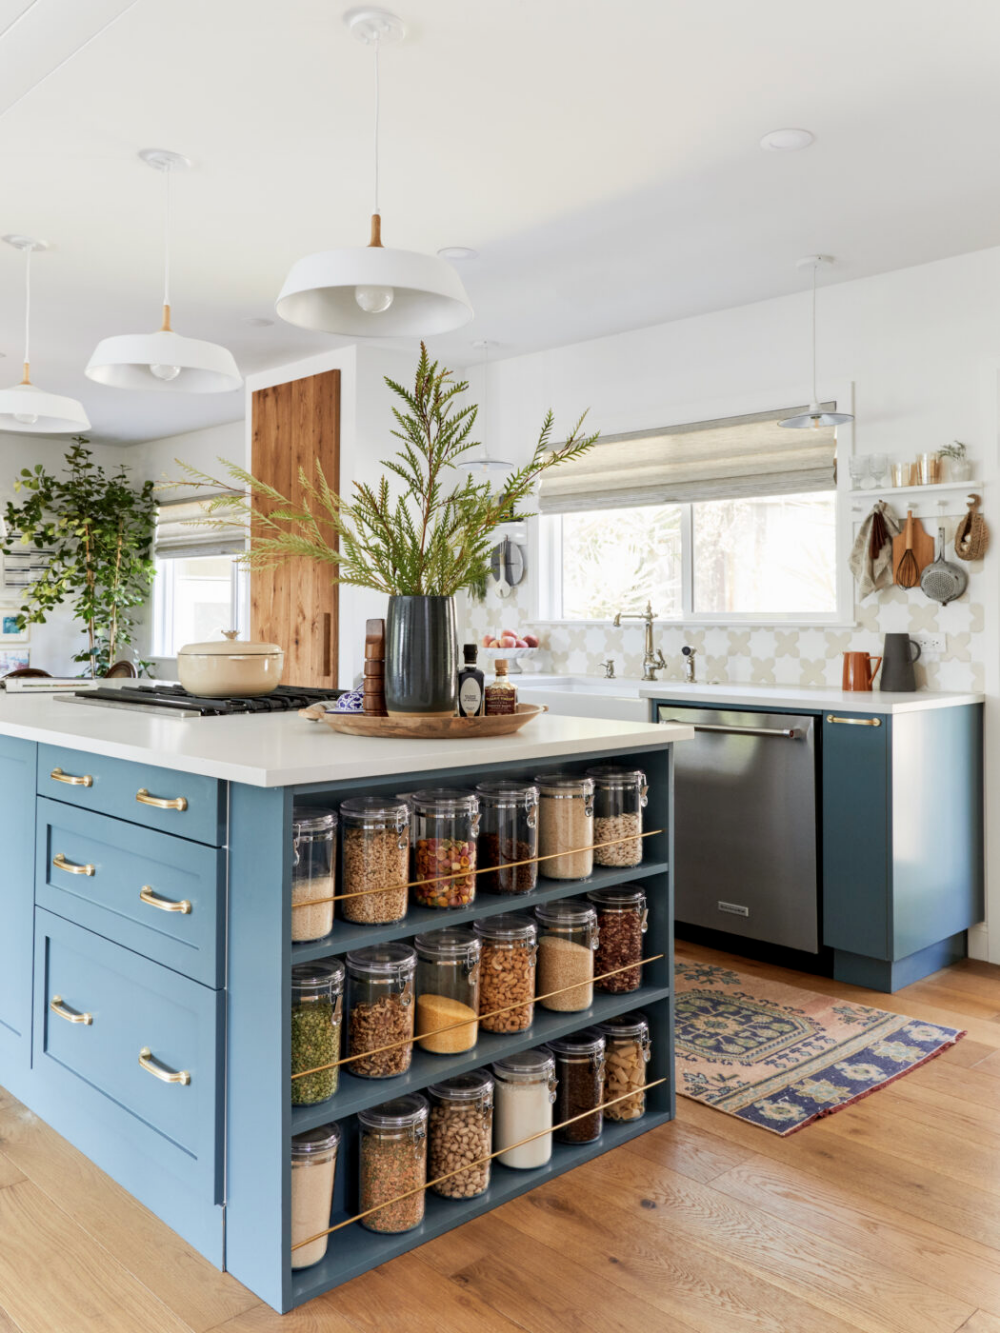 Get extensive kitchen renovation ideas